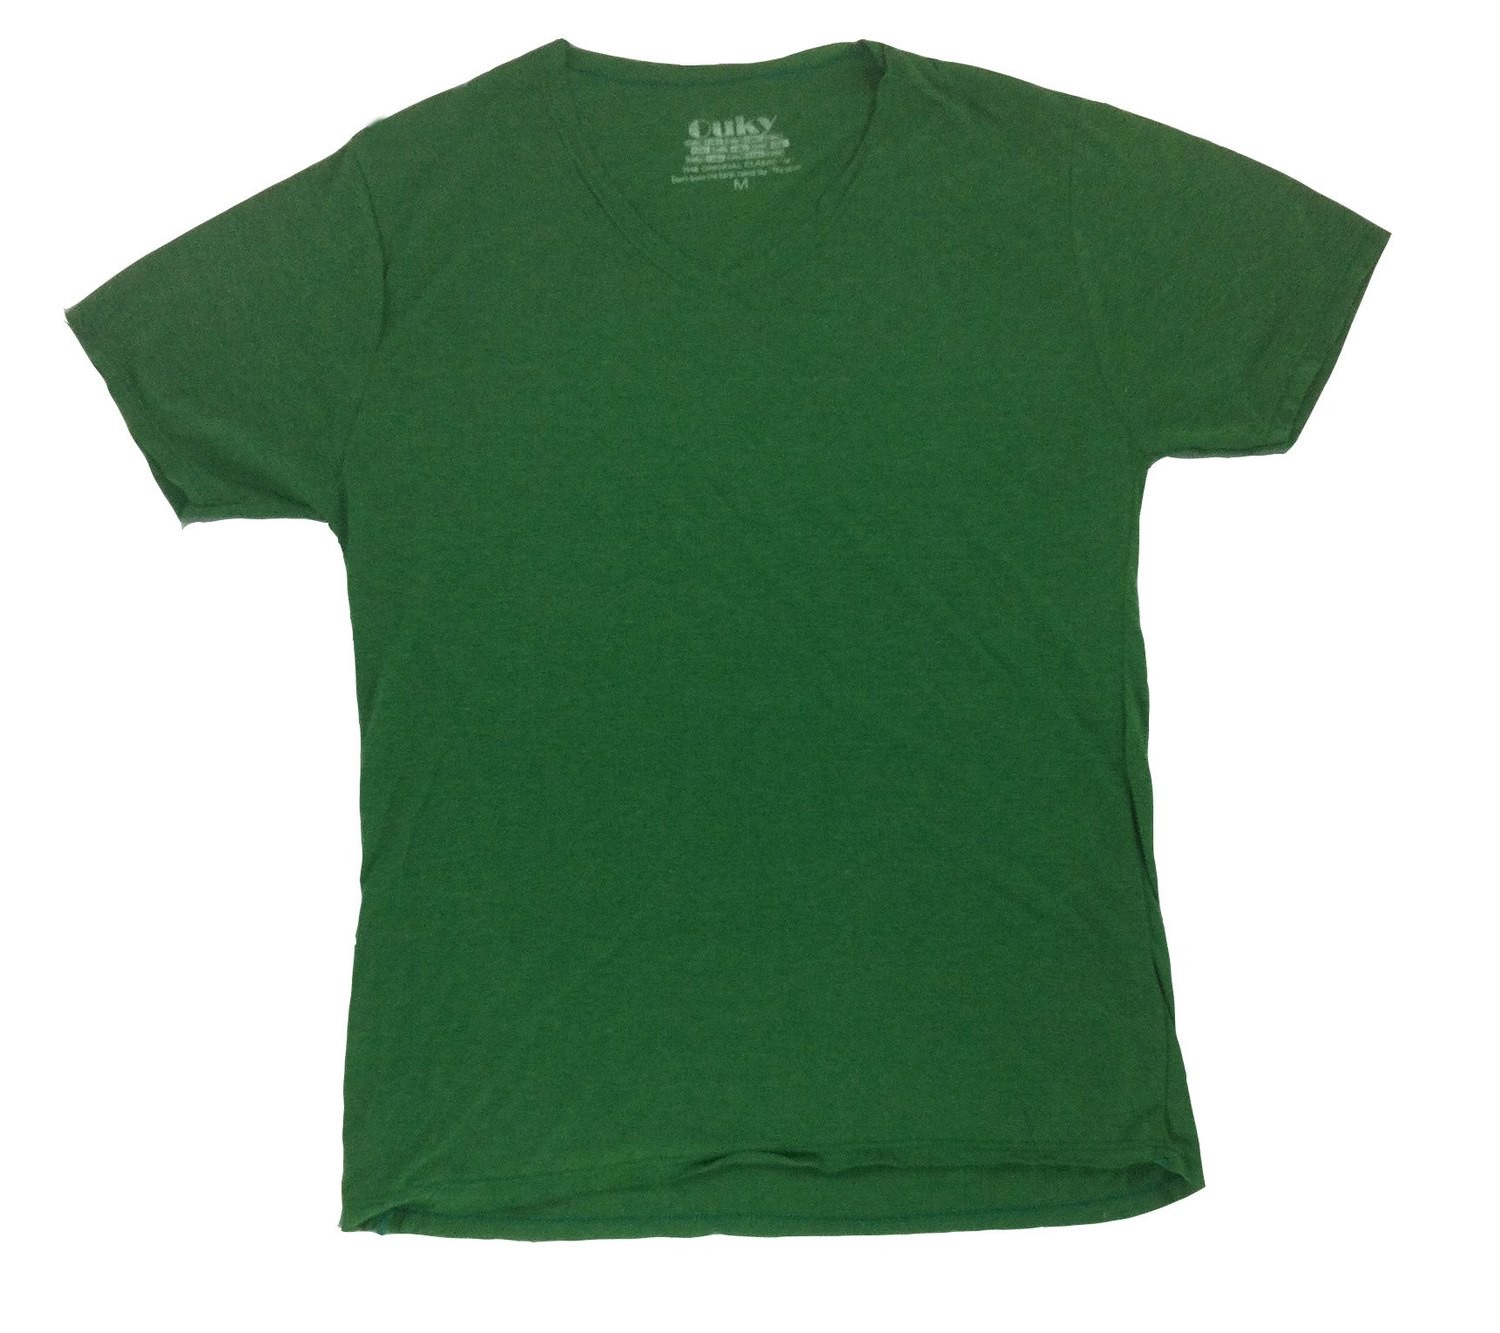 Ouky Original Tshirt Green Medium Size